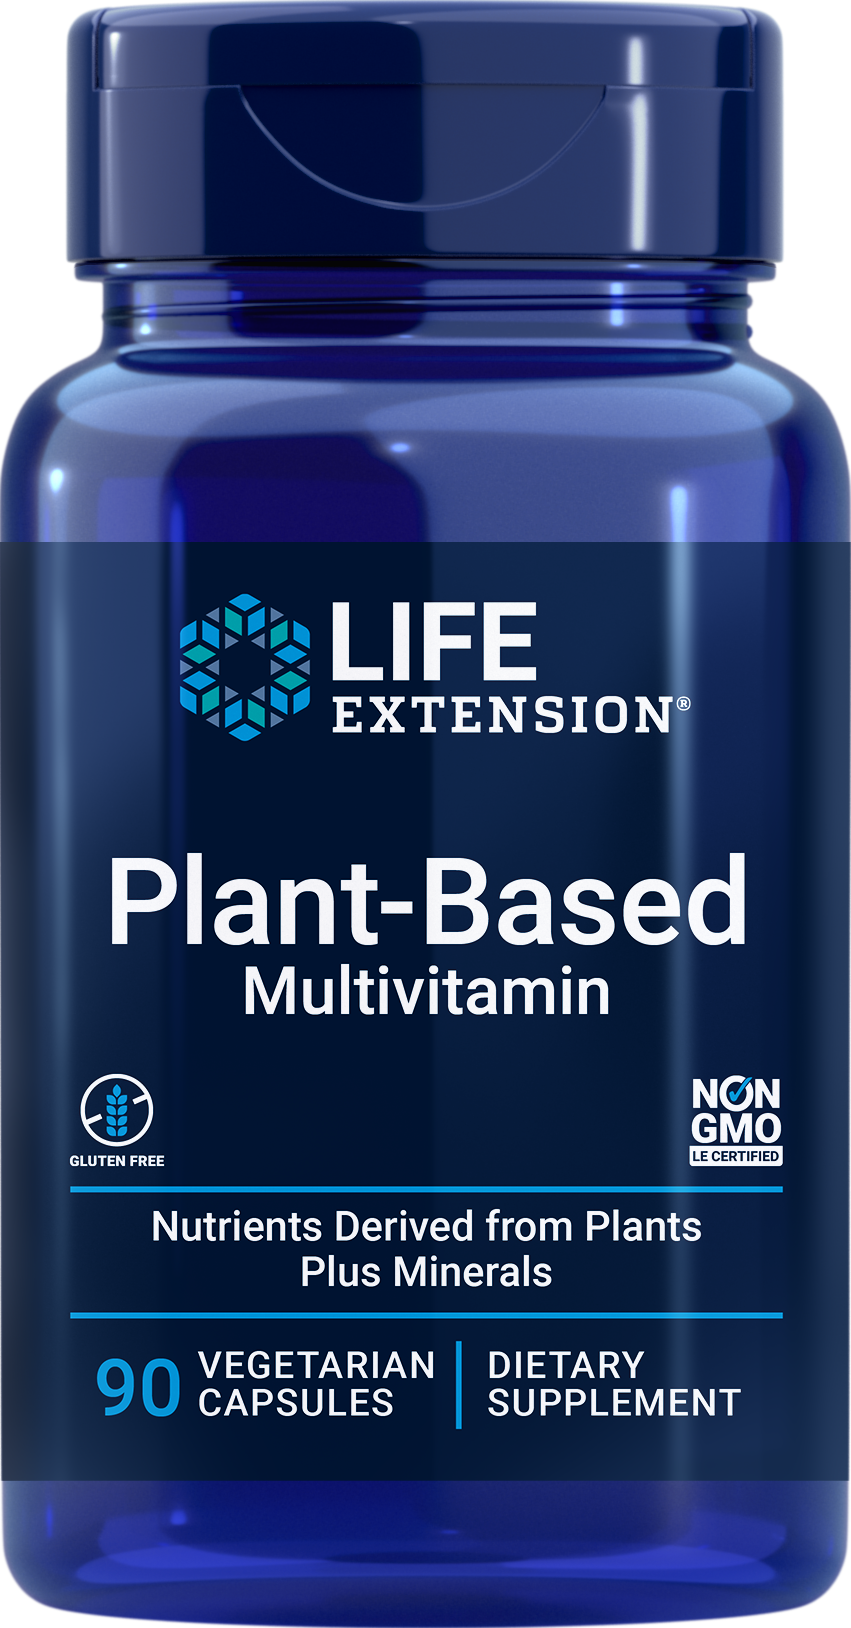 Plant-Based Multivitamin